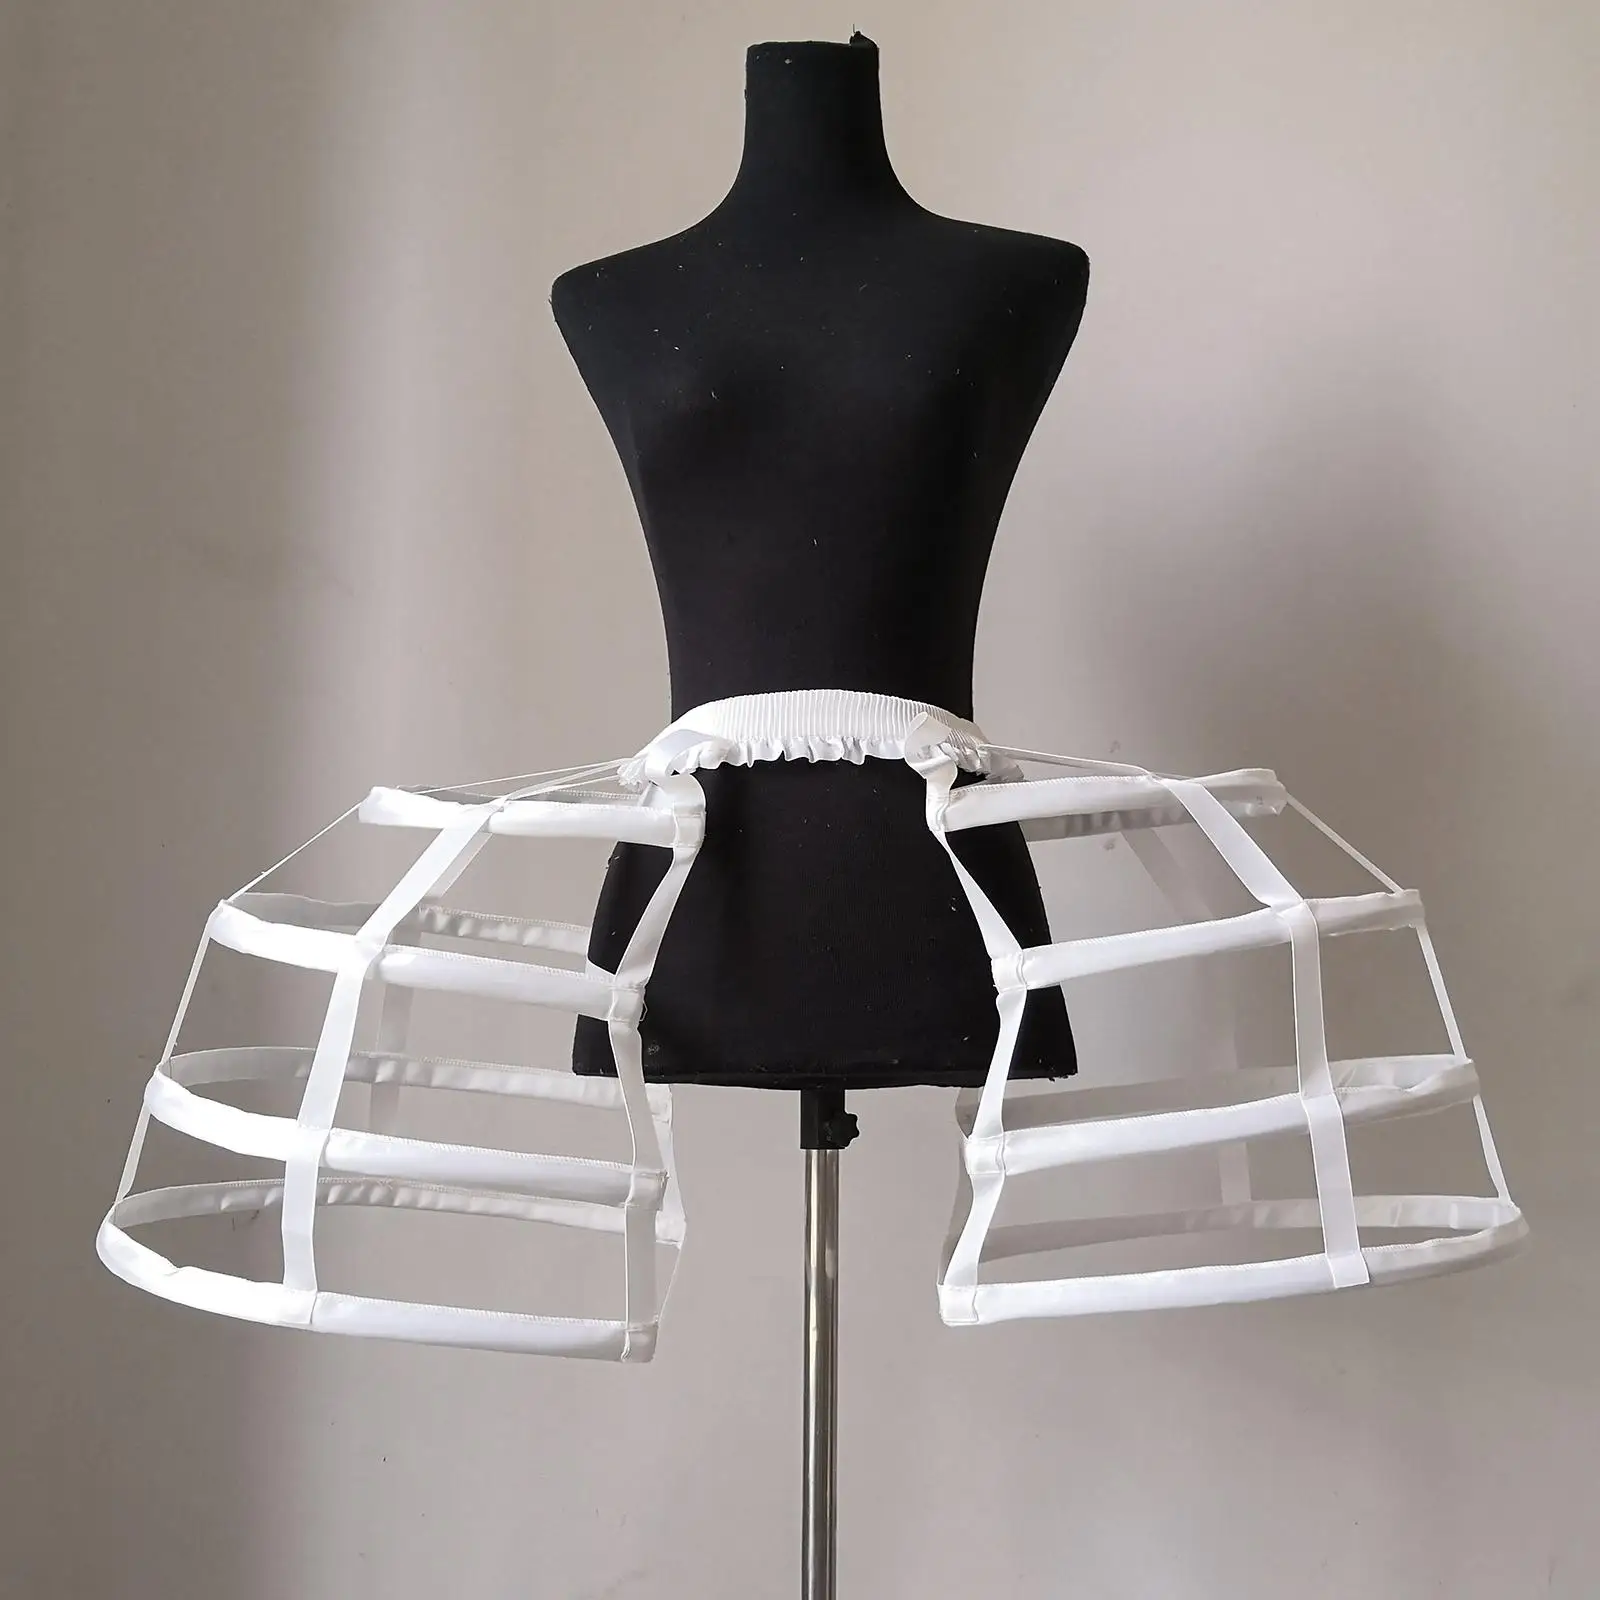 Cage Hoop Skirt Petticoat Crinoline Underskirt Pannier Womens Hoops Pannier Petticoat for Crinoline Slip Cage Underskirt Evening